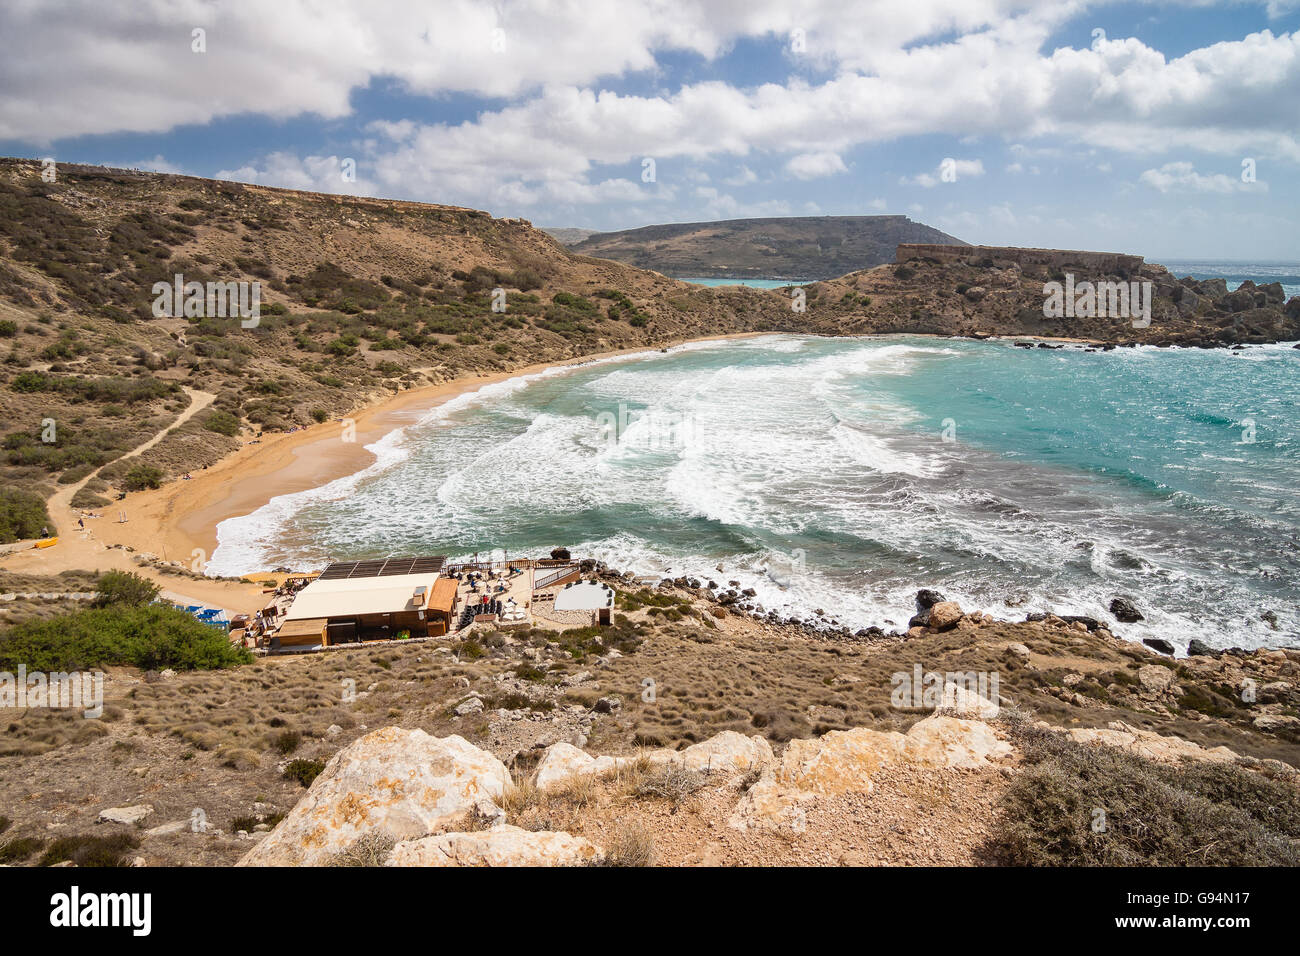 The sandy beach below the rocky cliffs of the Malta island Stock Photo